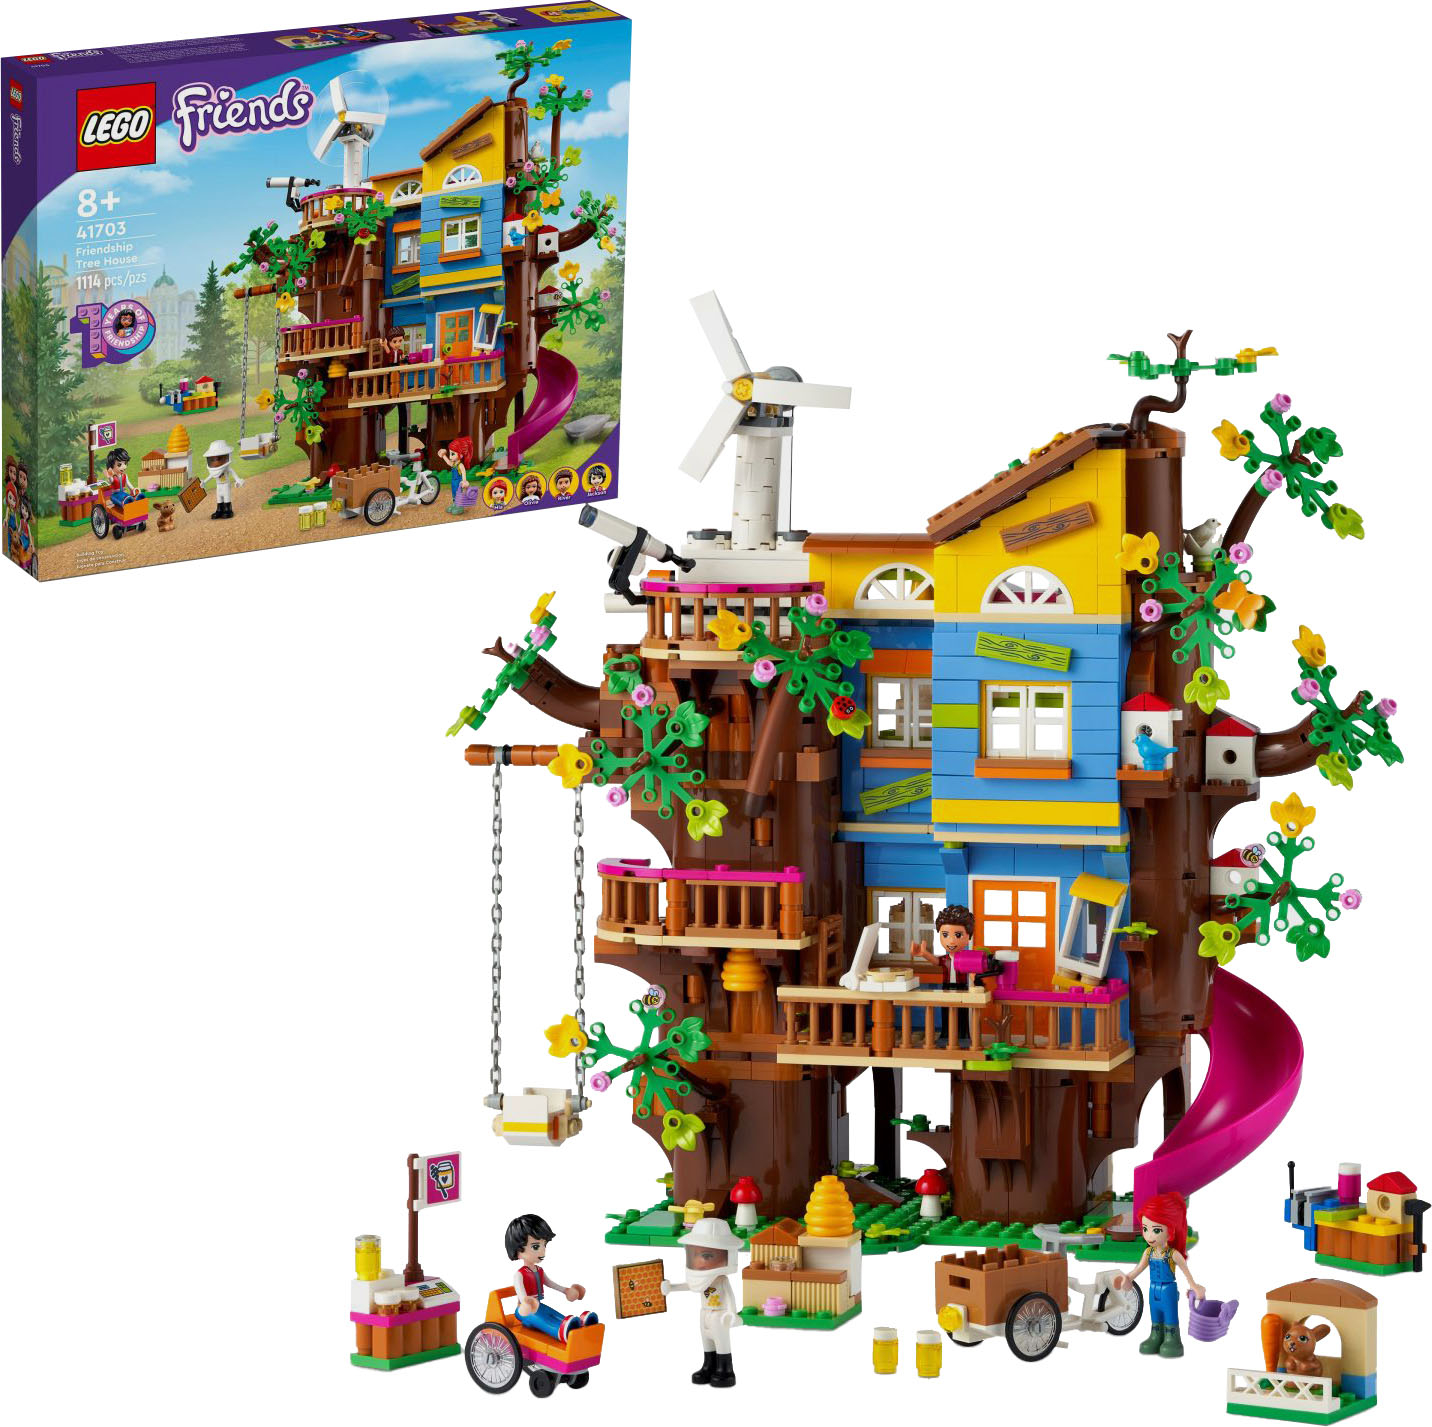 LEGO Friends Friendship House 41703 Best Buy